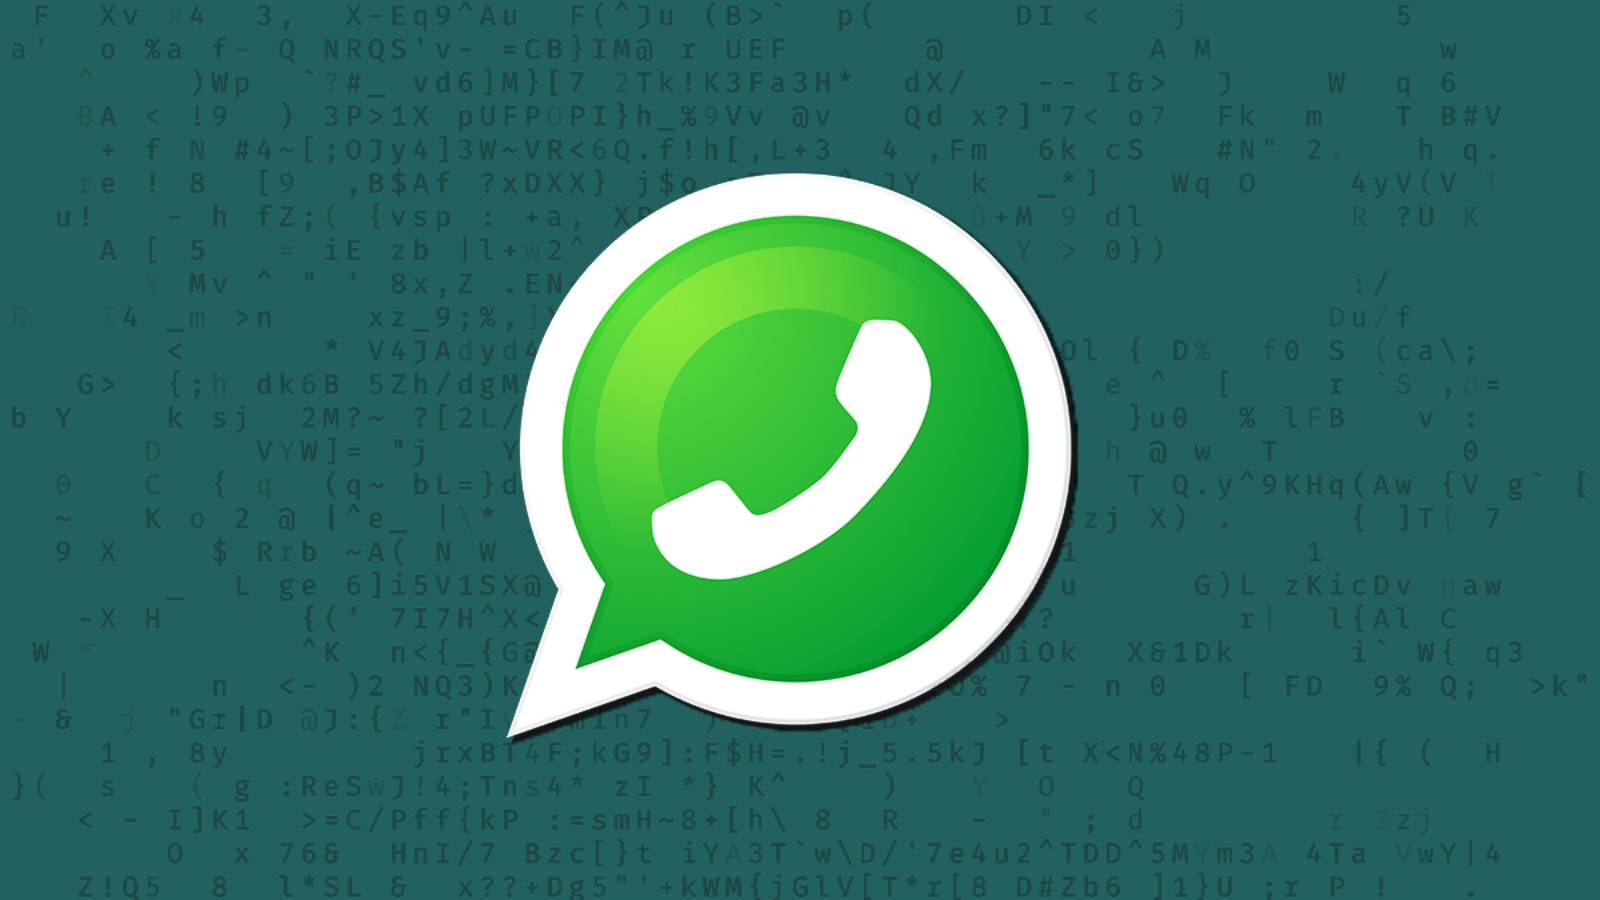 WhatsApp terminat